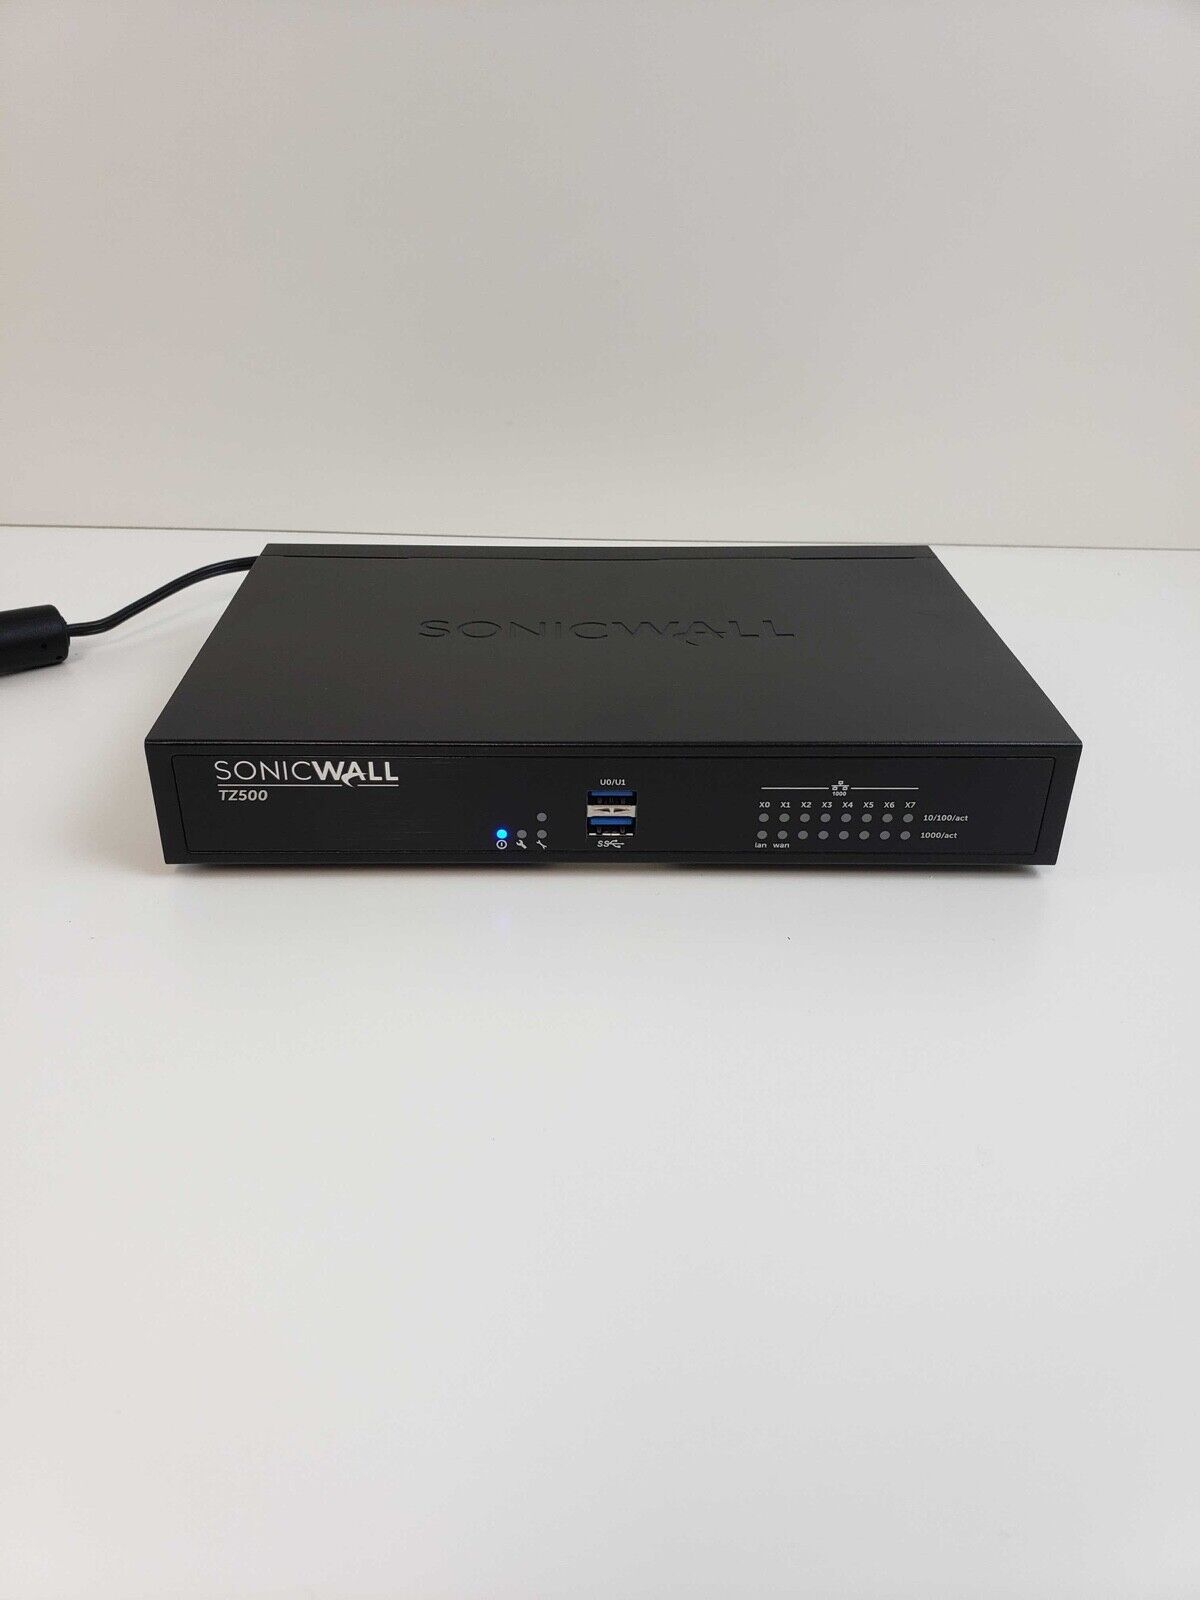 SonicWALL TZ500 Firewall Network Security Appliance